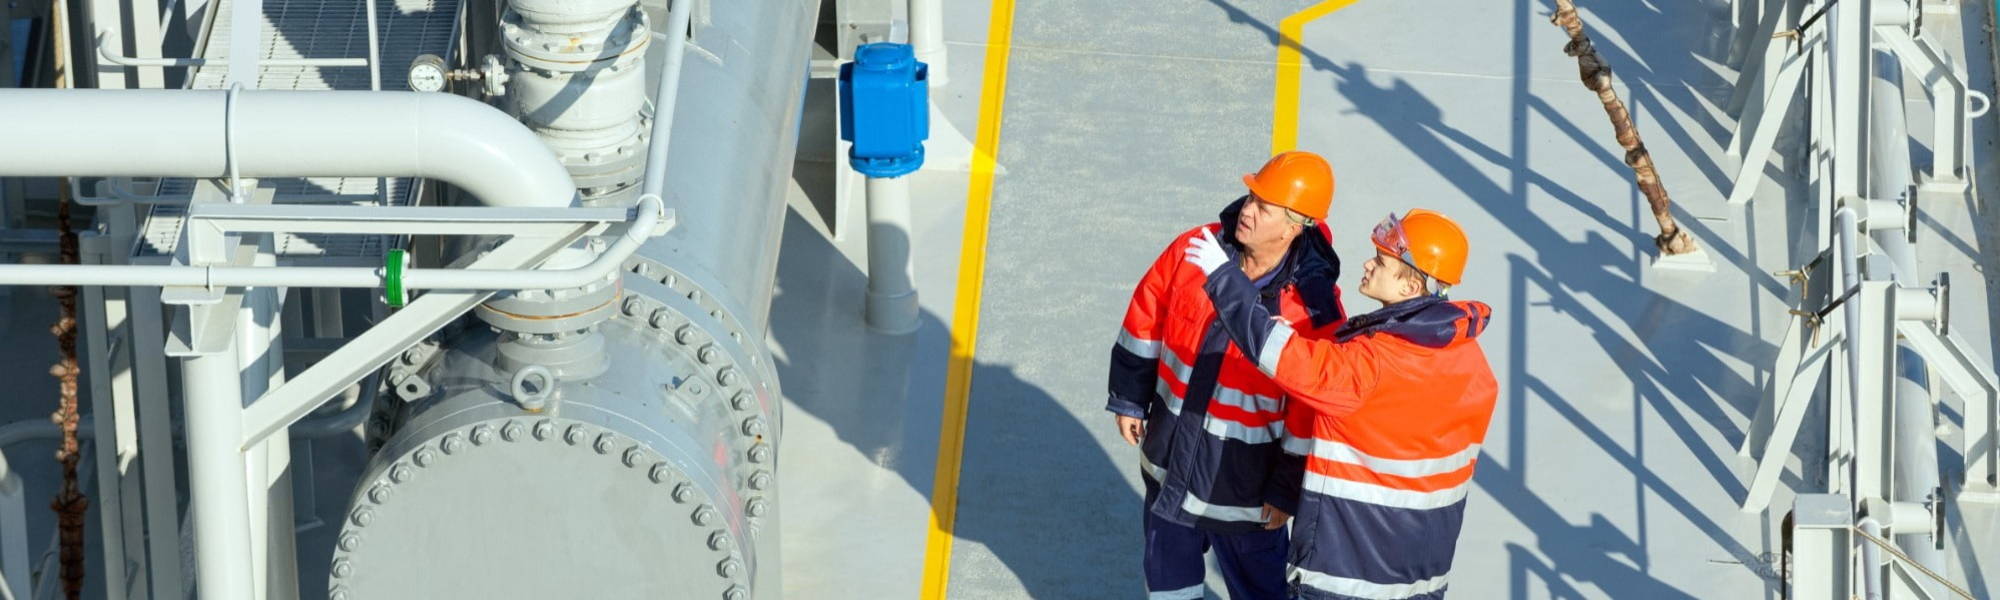 Gas Engineers Inspecting Equipment